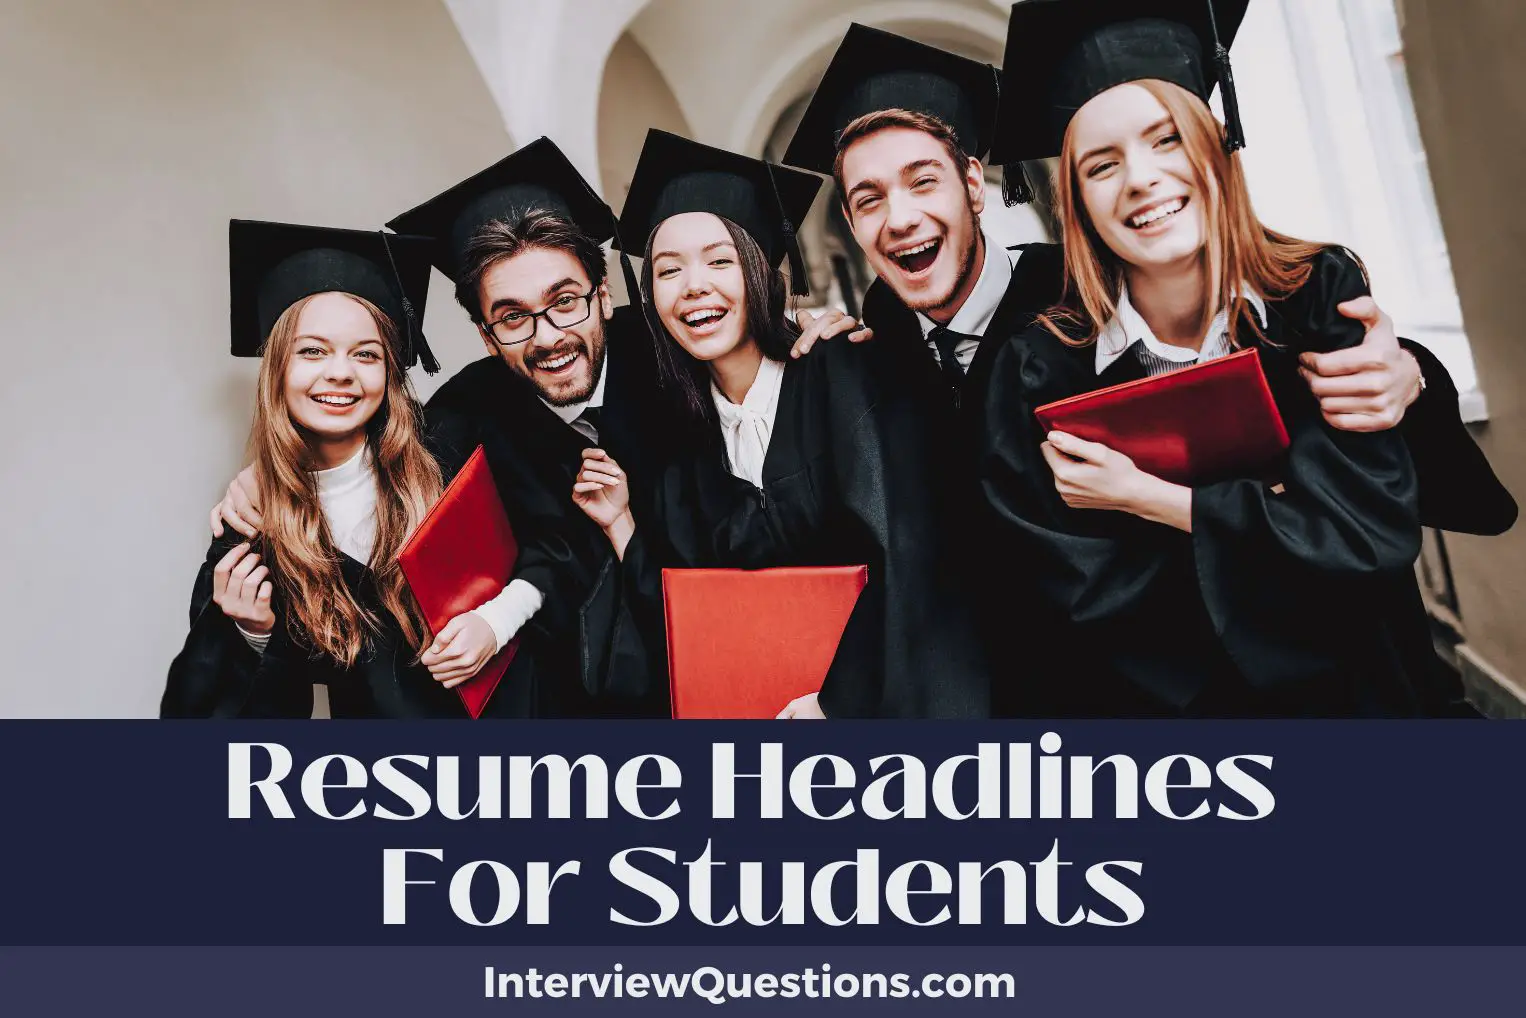 Resume Headlines For Students